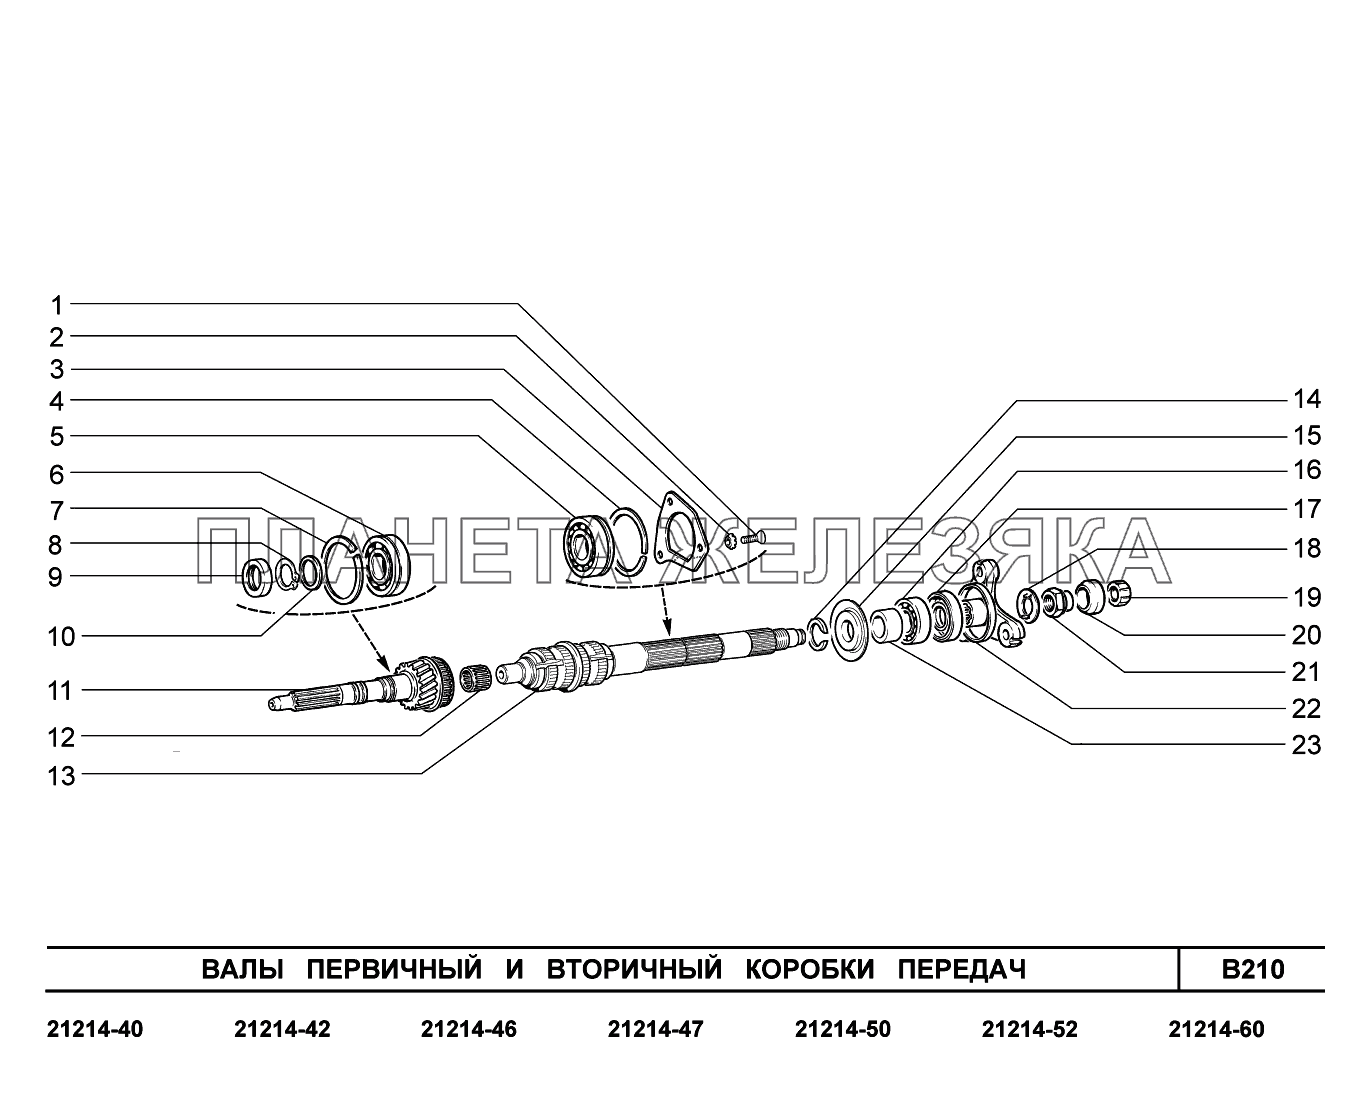 B210. Валы первичный и вторичный коробки передач Lada 4x4 Urban